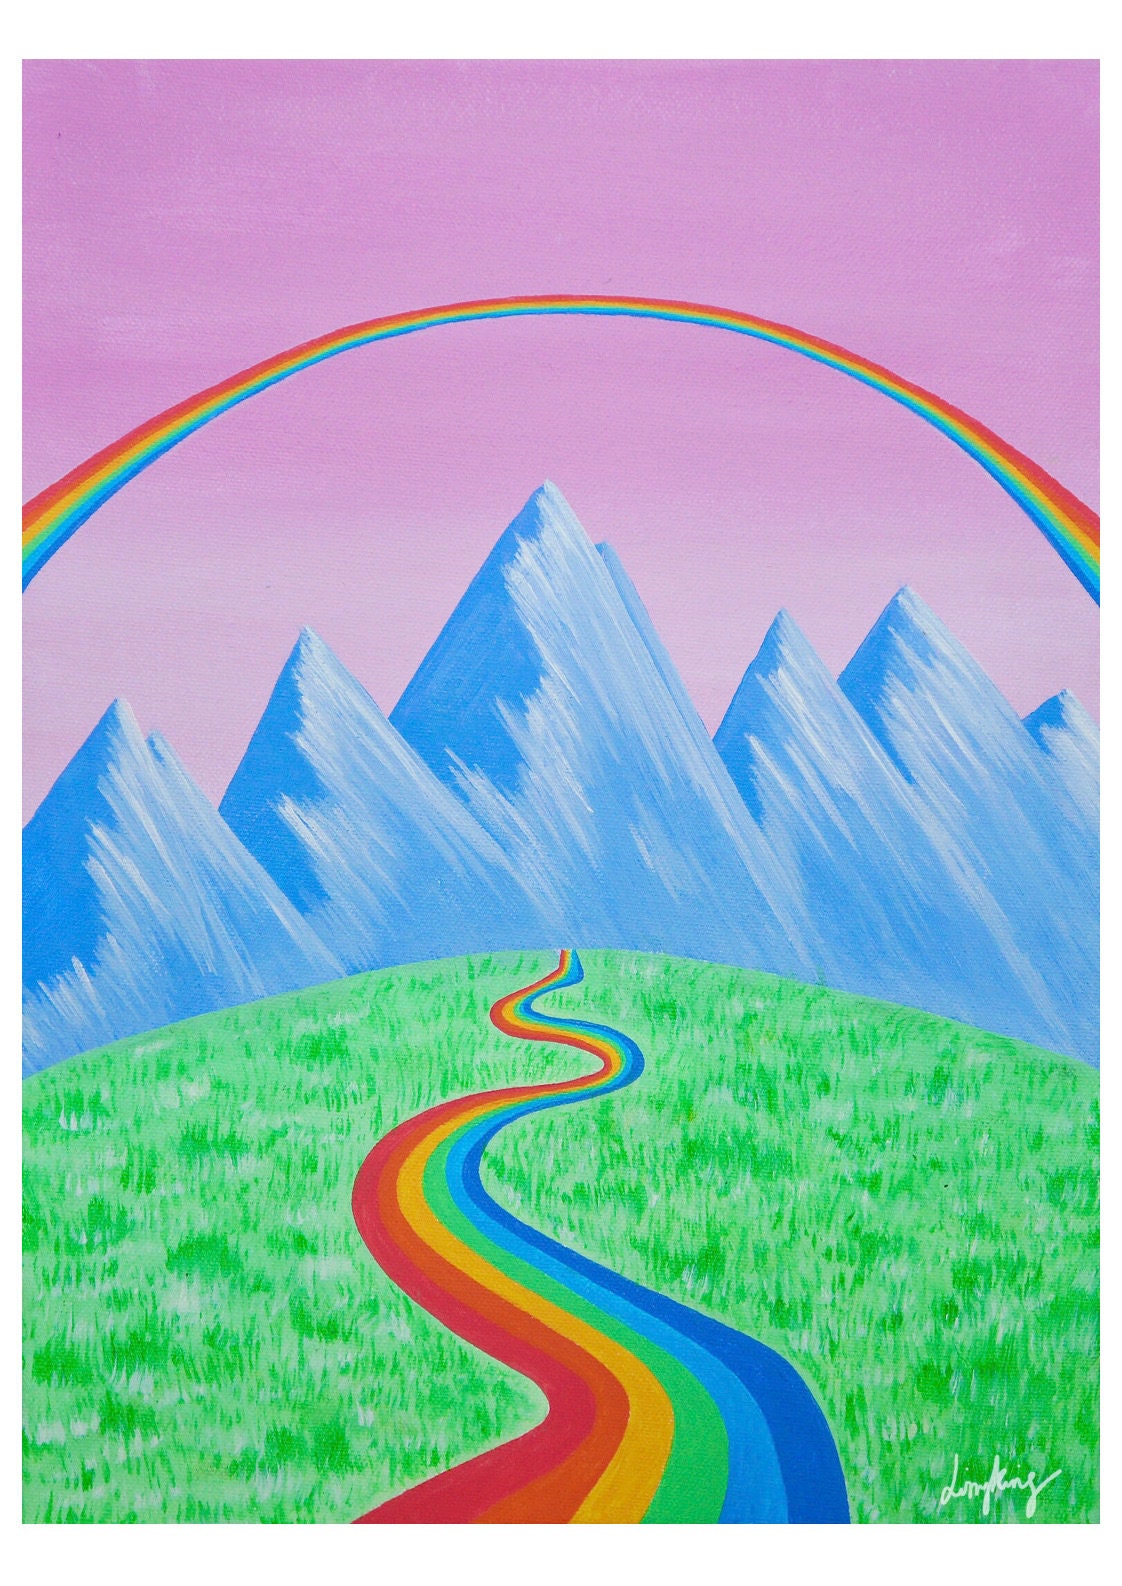 Regenbogen Bergwiese Berge 1P Bild auf Leinwand Wandbild Poster Kunstdruck 